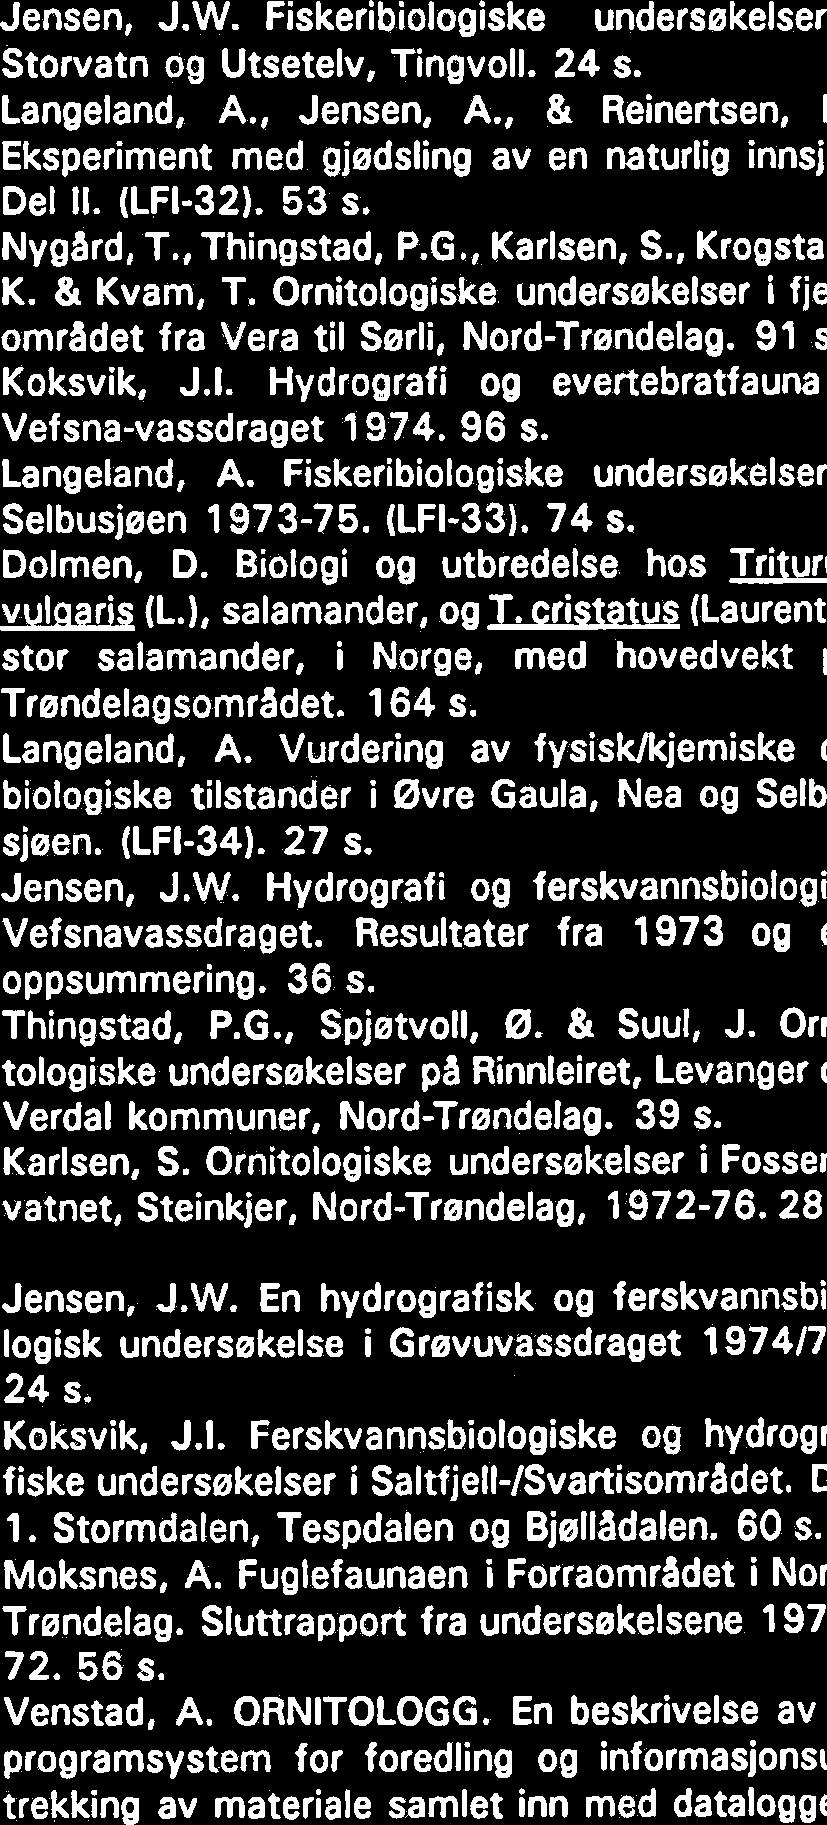 Fiskeribiologiske undersekelser i Storvatnet, Afjord kommune, fei regulering. Haukebe, T. En hydrografisk og biologisk inventering i Forra-vassdraget. 57 s. Suul, J.